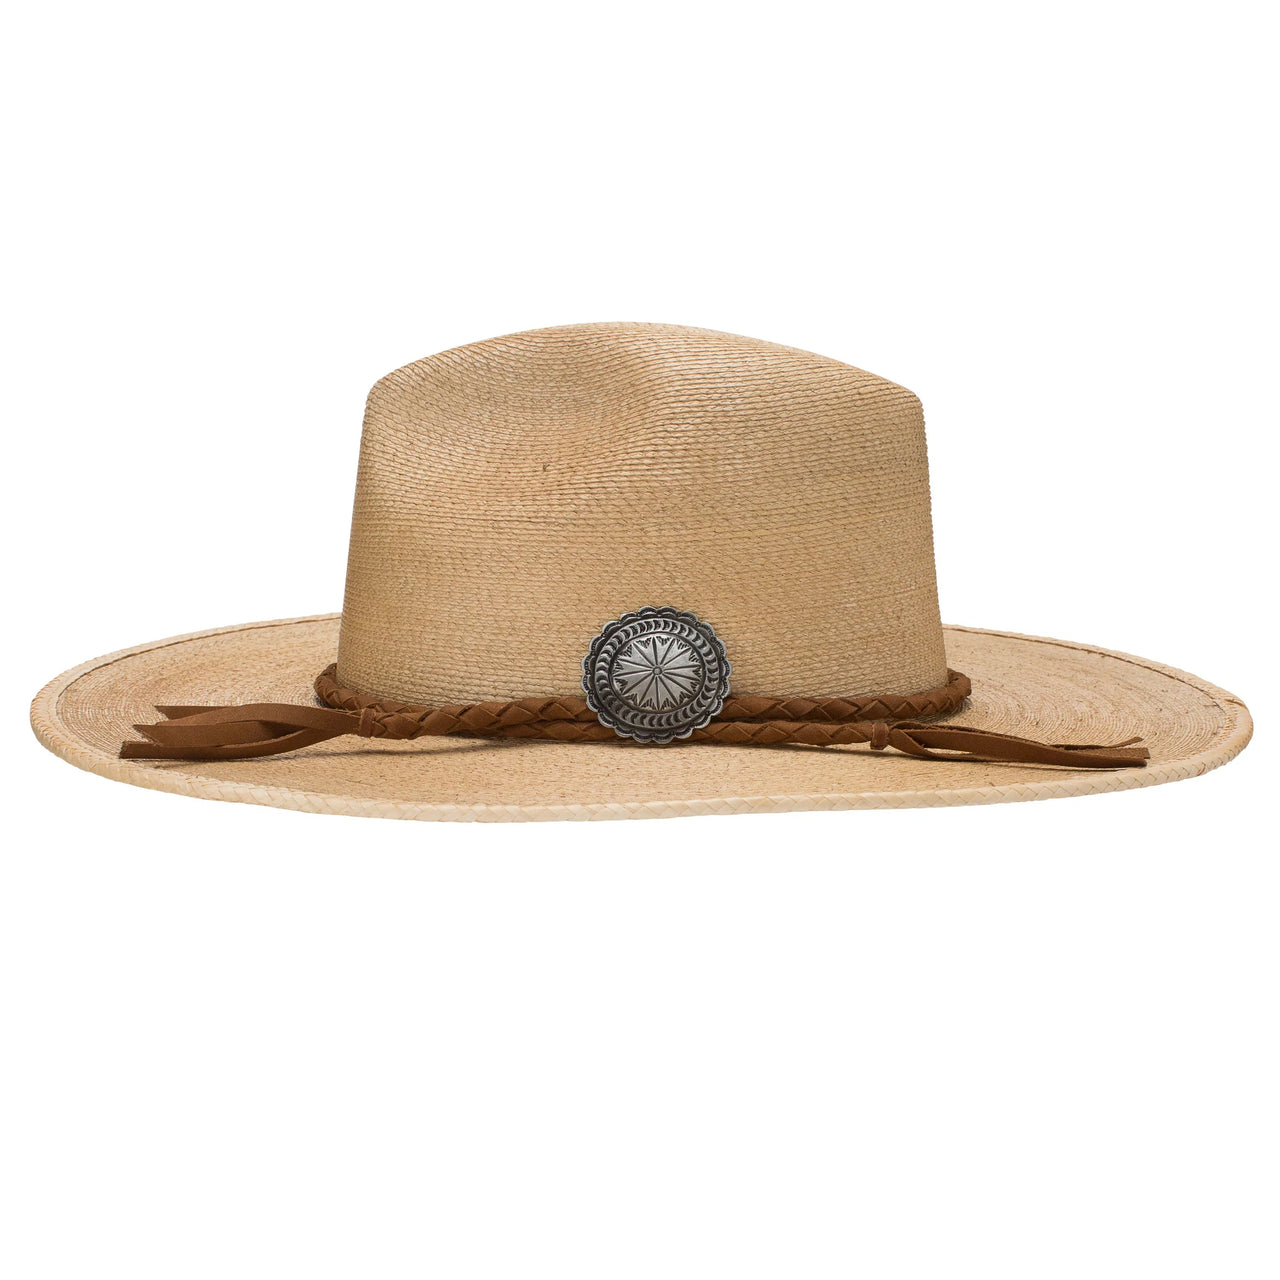 Charlie 1 Horse Lefty Straw Fashion Hat - Copper